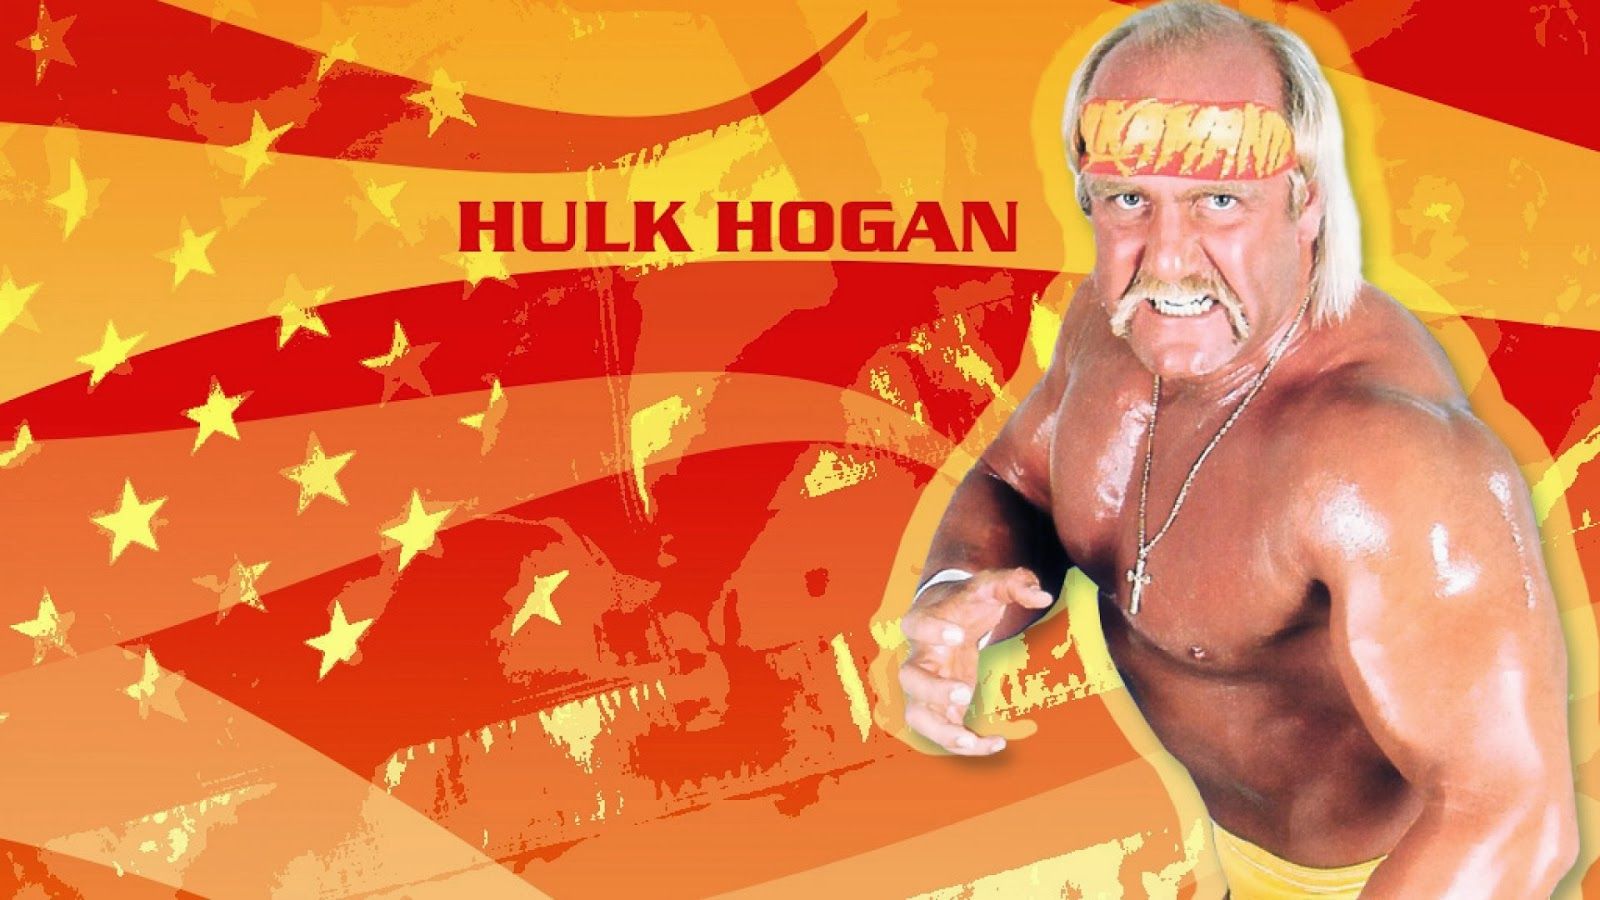 Hogan Wallpaper. Hollywood Hogan